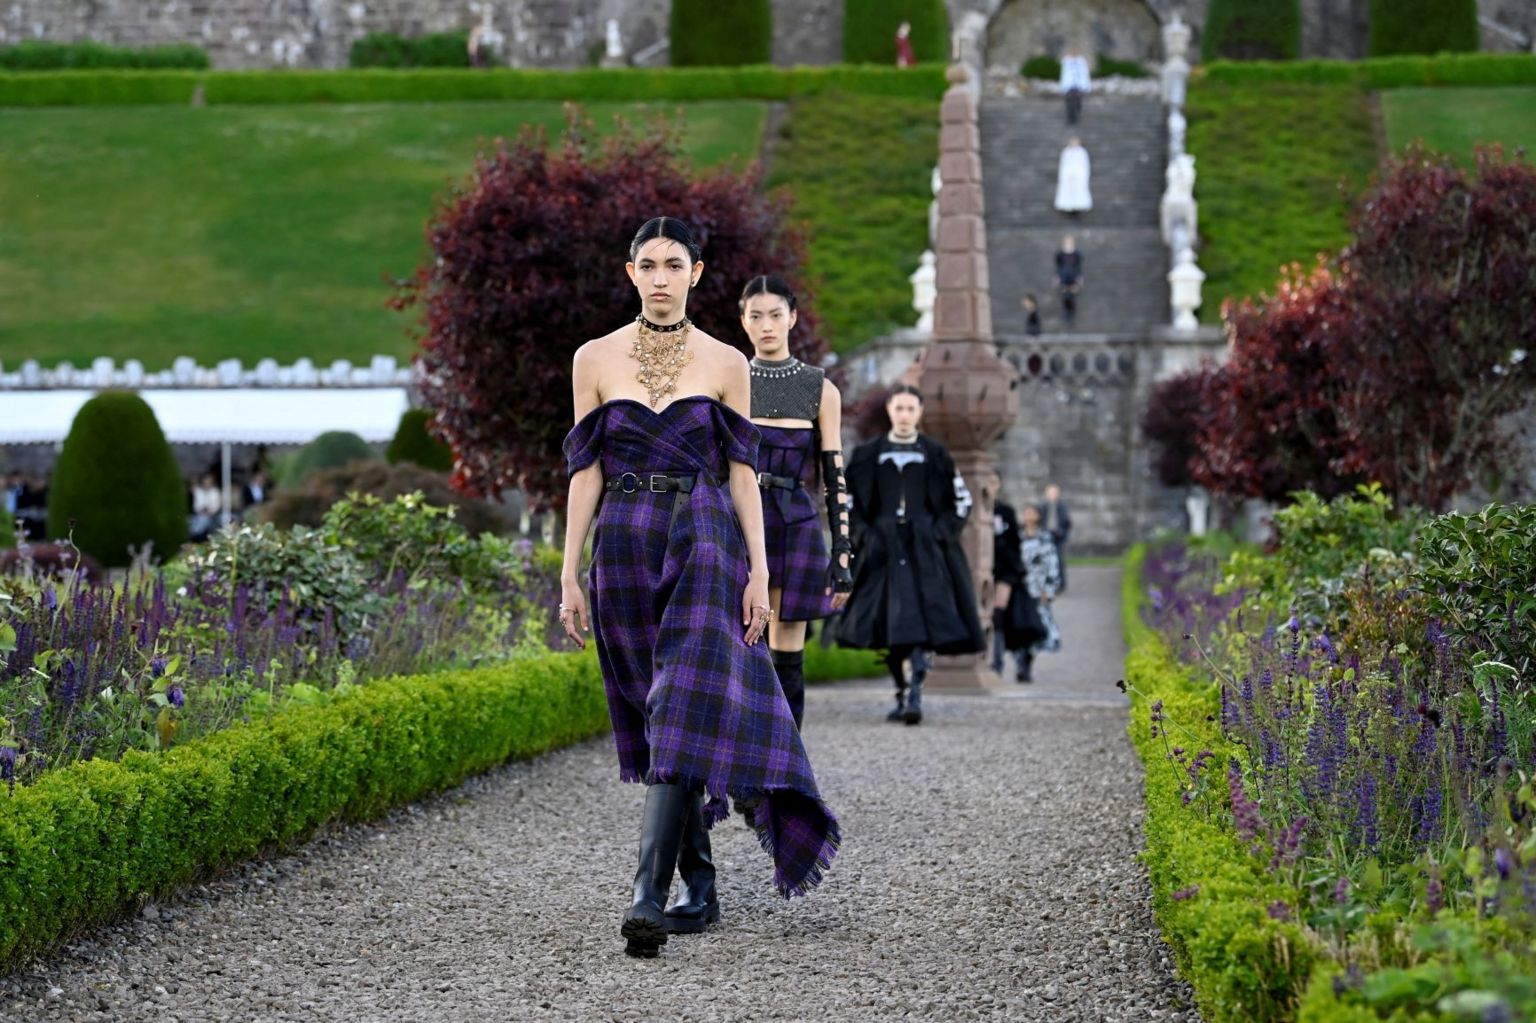 Dior catwalk at Drummond Gardens  - models wearing kilts